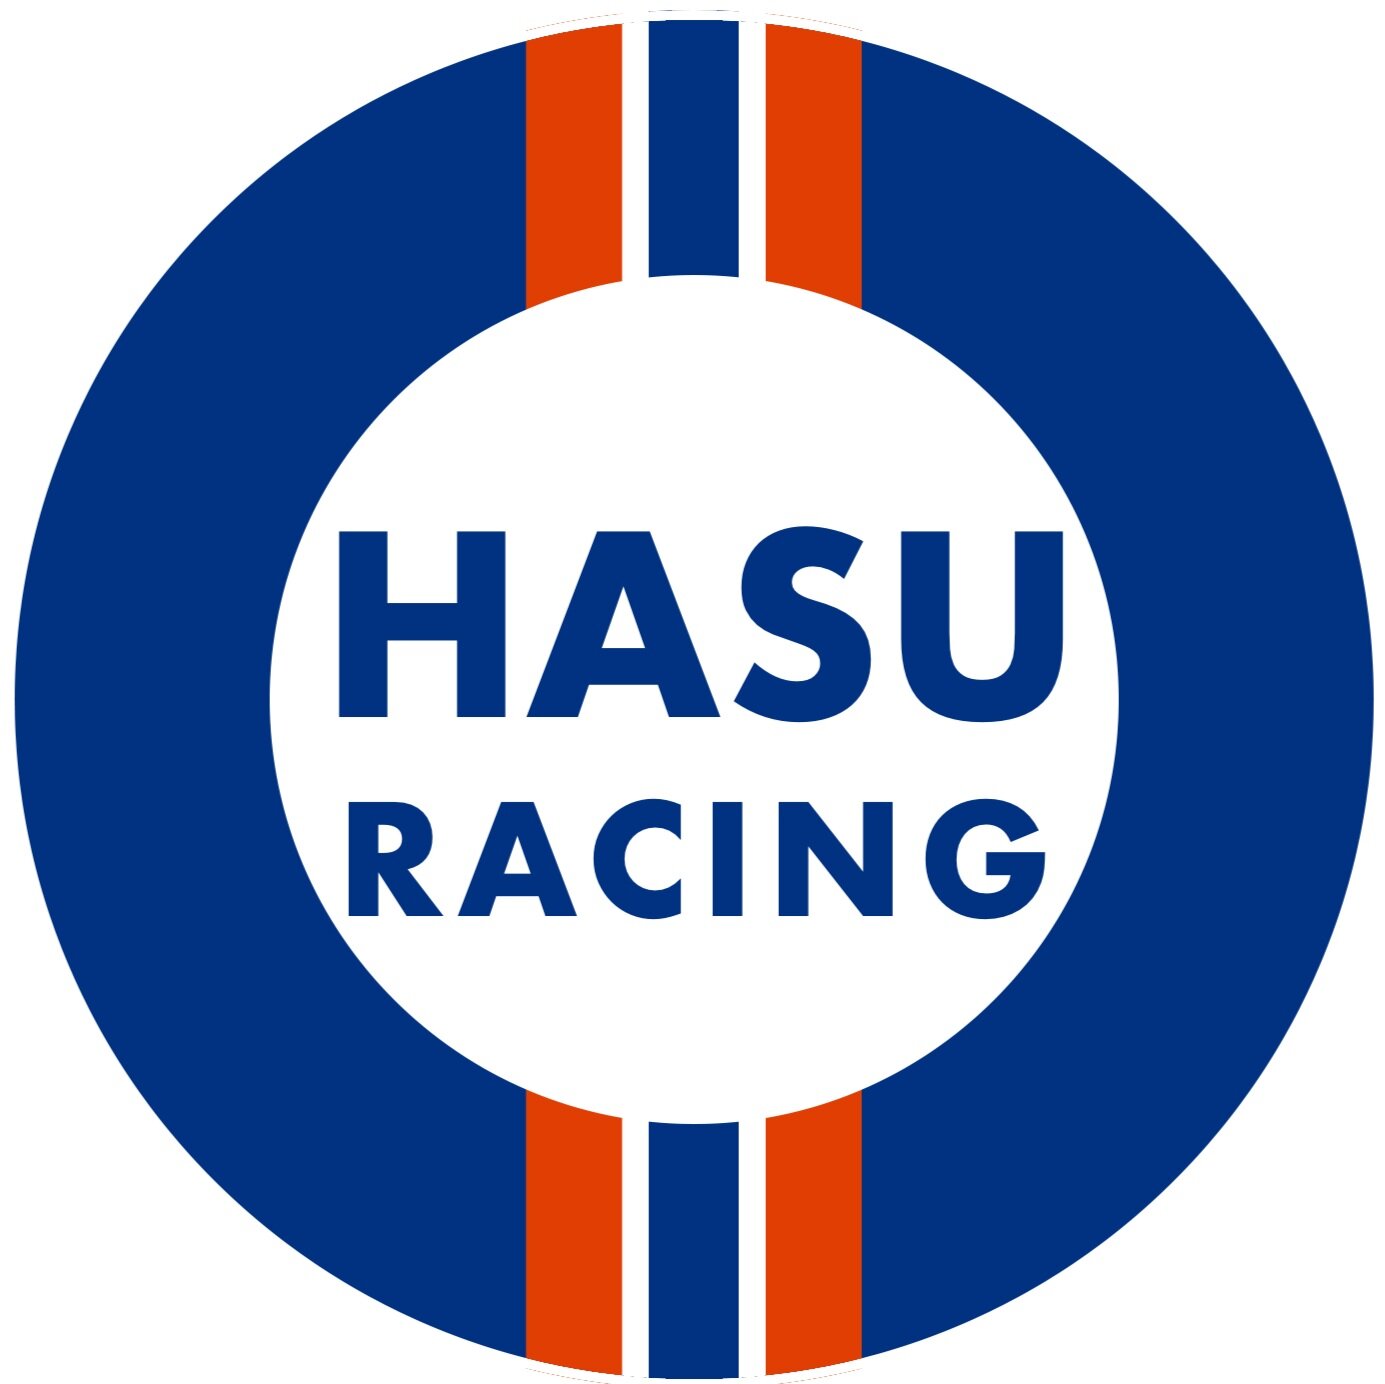 HASU RACING